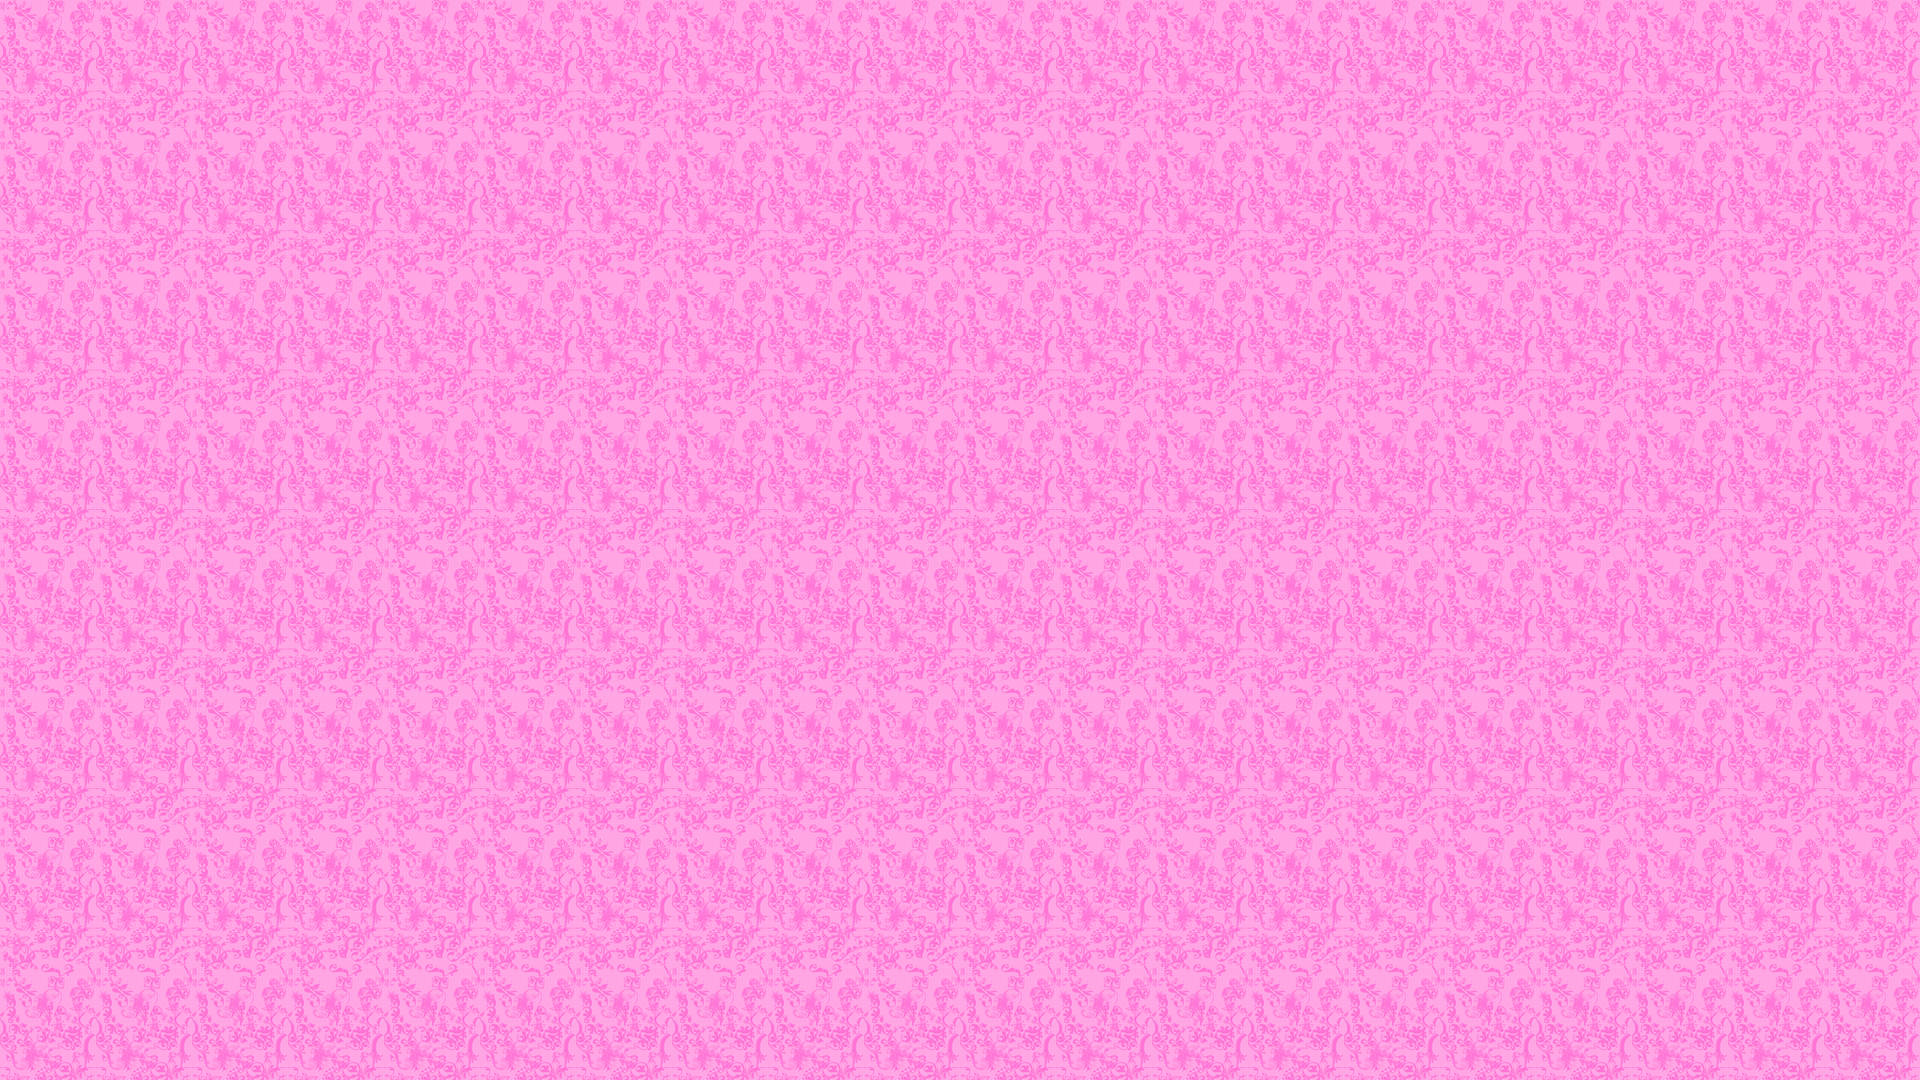 Hot Pinkfarbener Hintergrundbilder